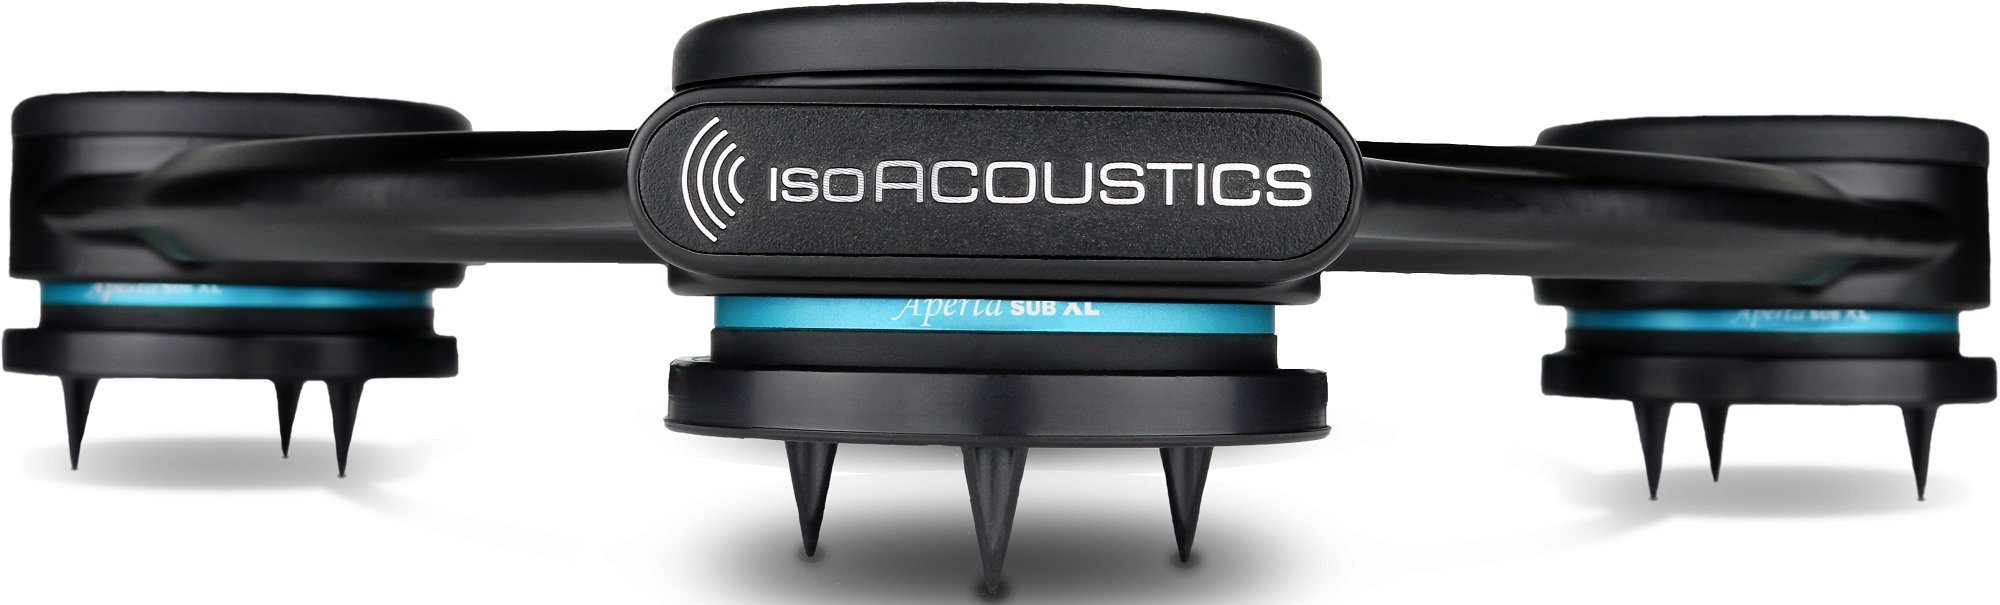 isoacoustics-aperta-sub-xl-isolation-platform-for-subwoofers-160lbs-capacity